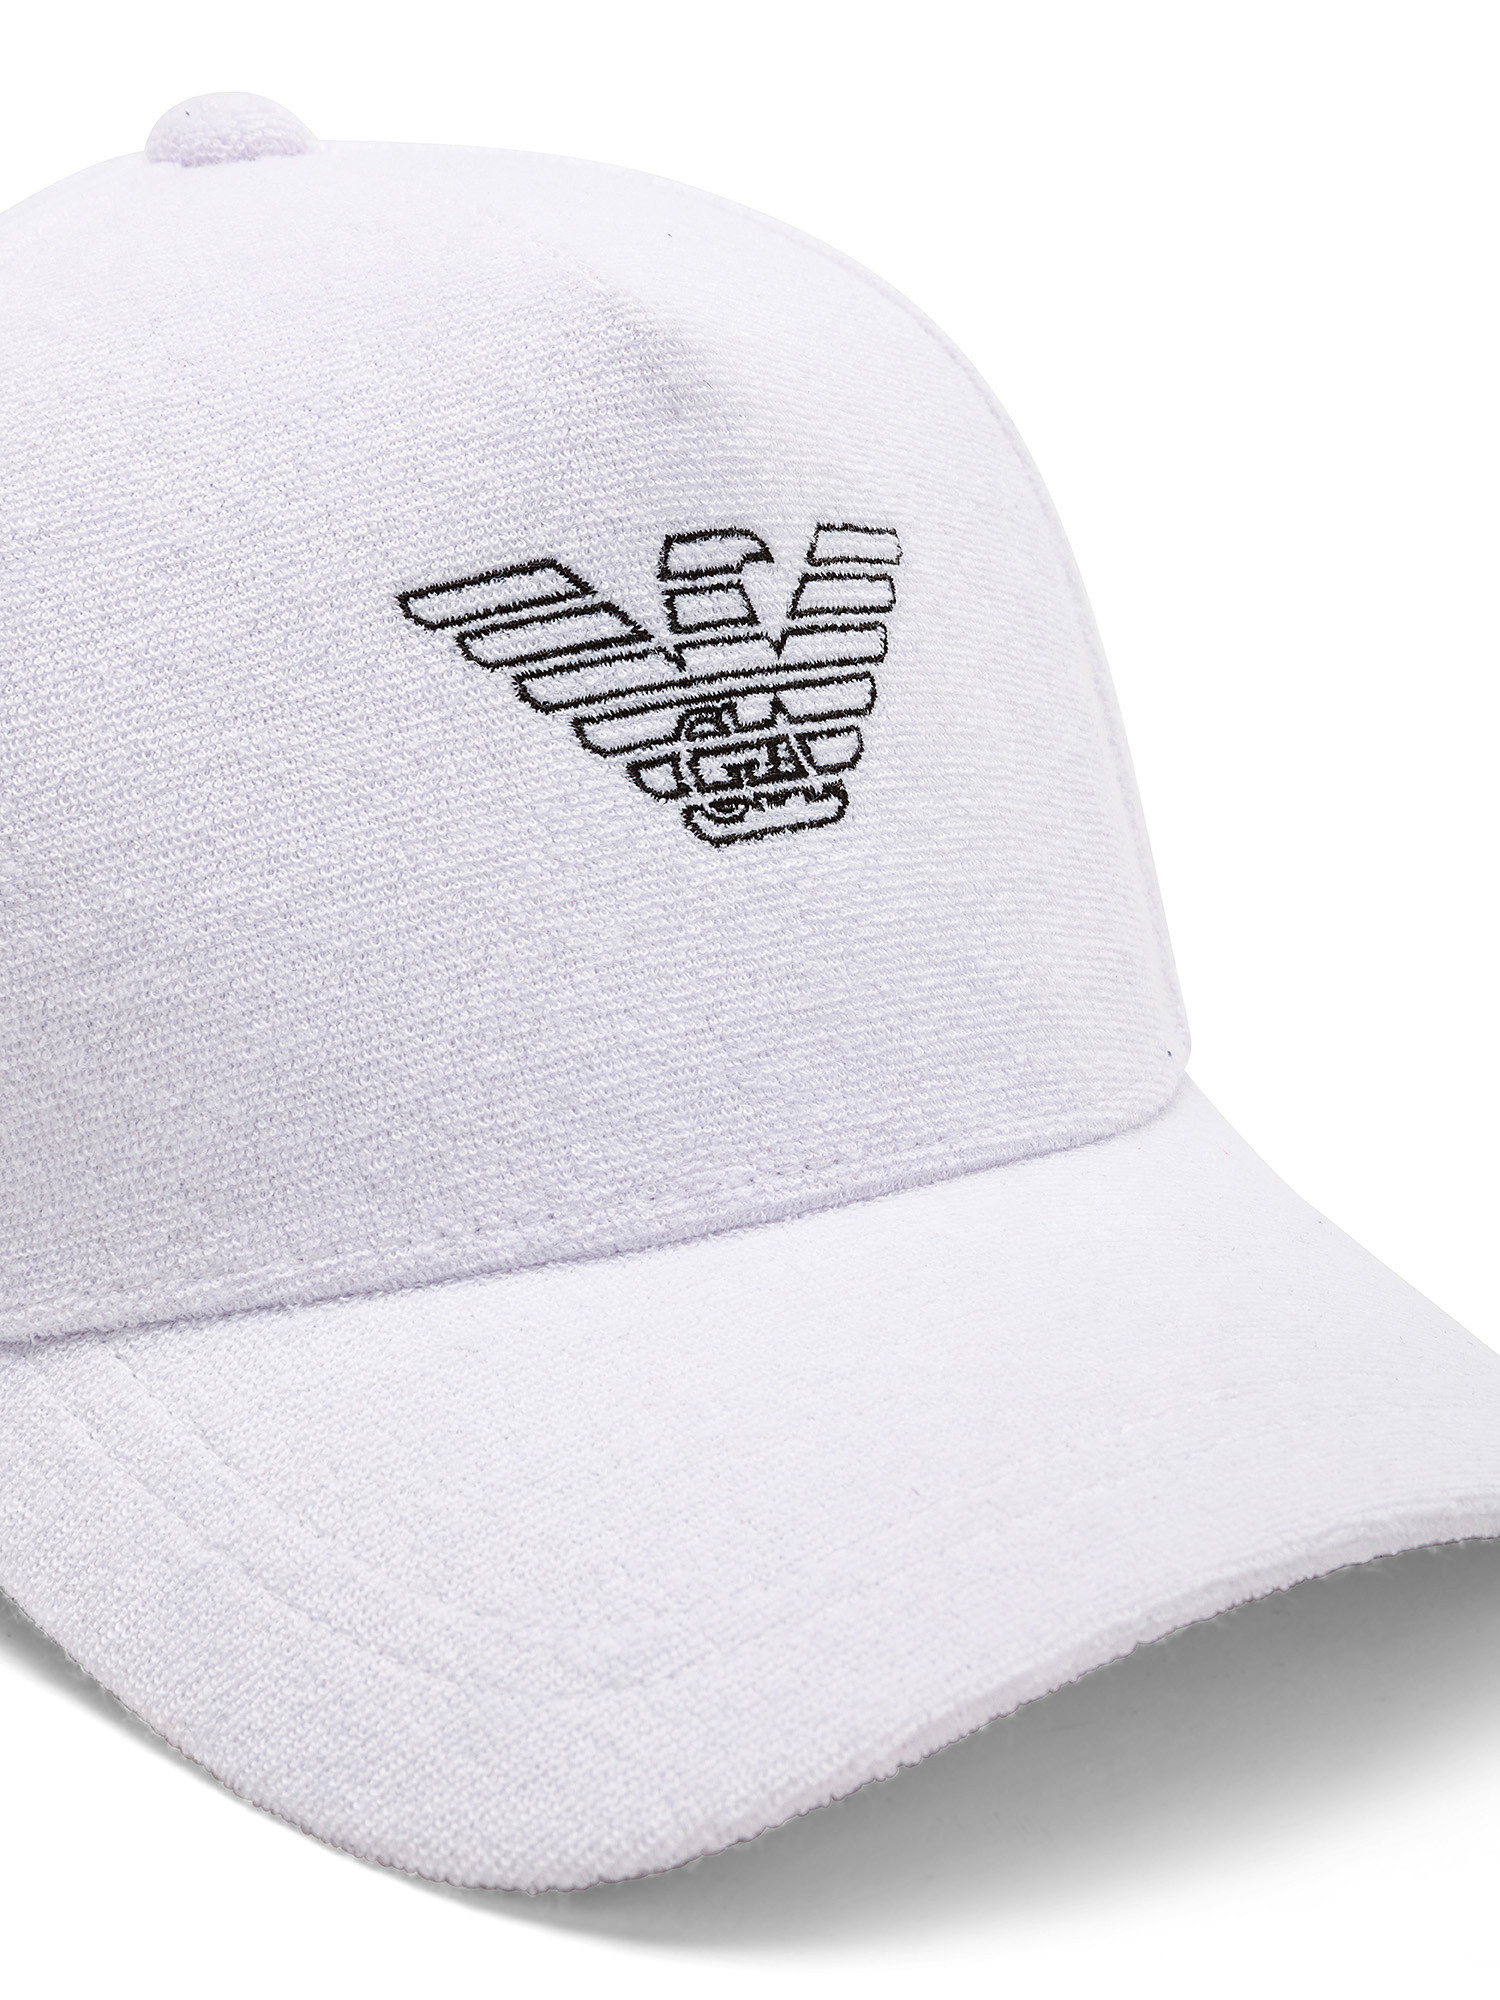 Cappello da baseball con logo aquila, Bianco, large image number 1